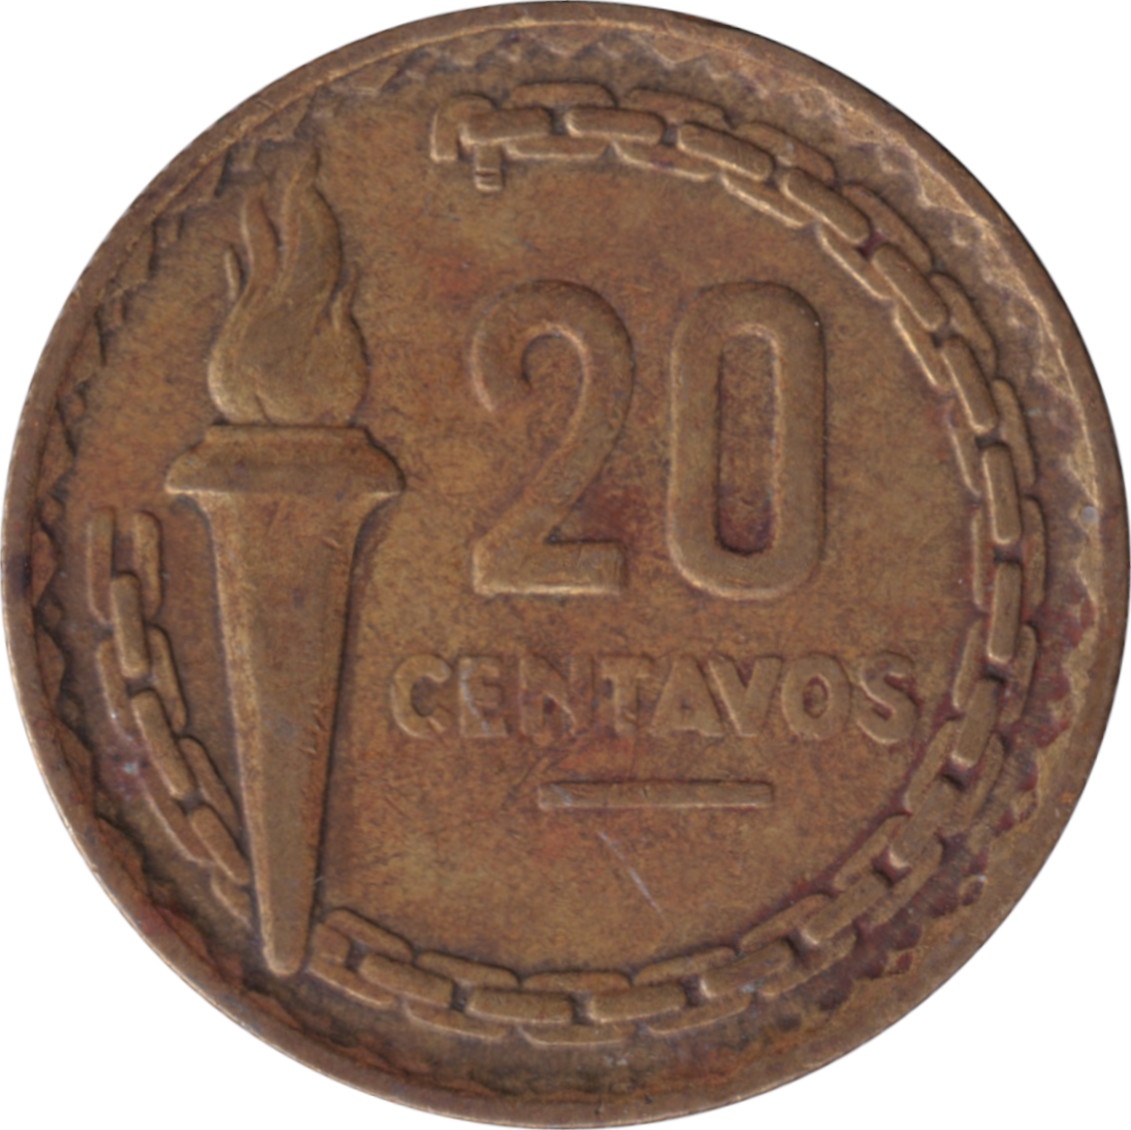 20 centavos - Abolition de l'esclavage - 100 years